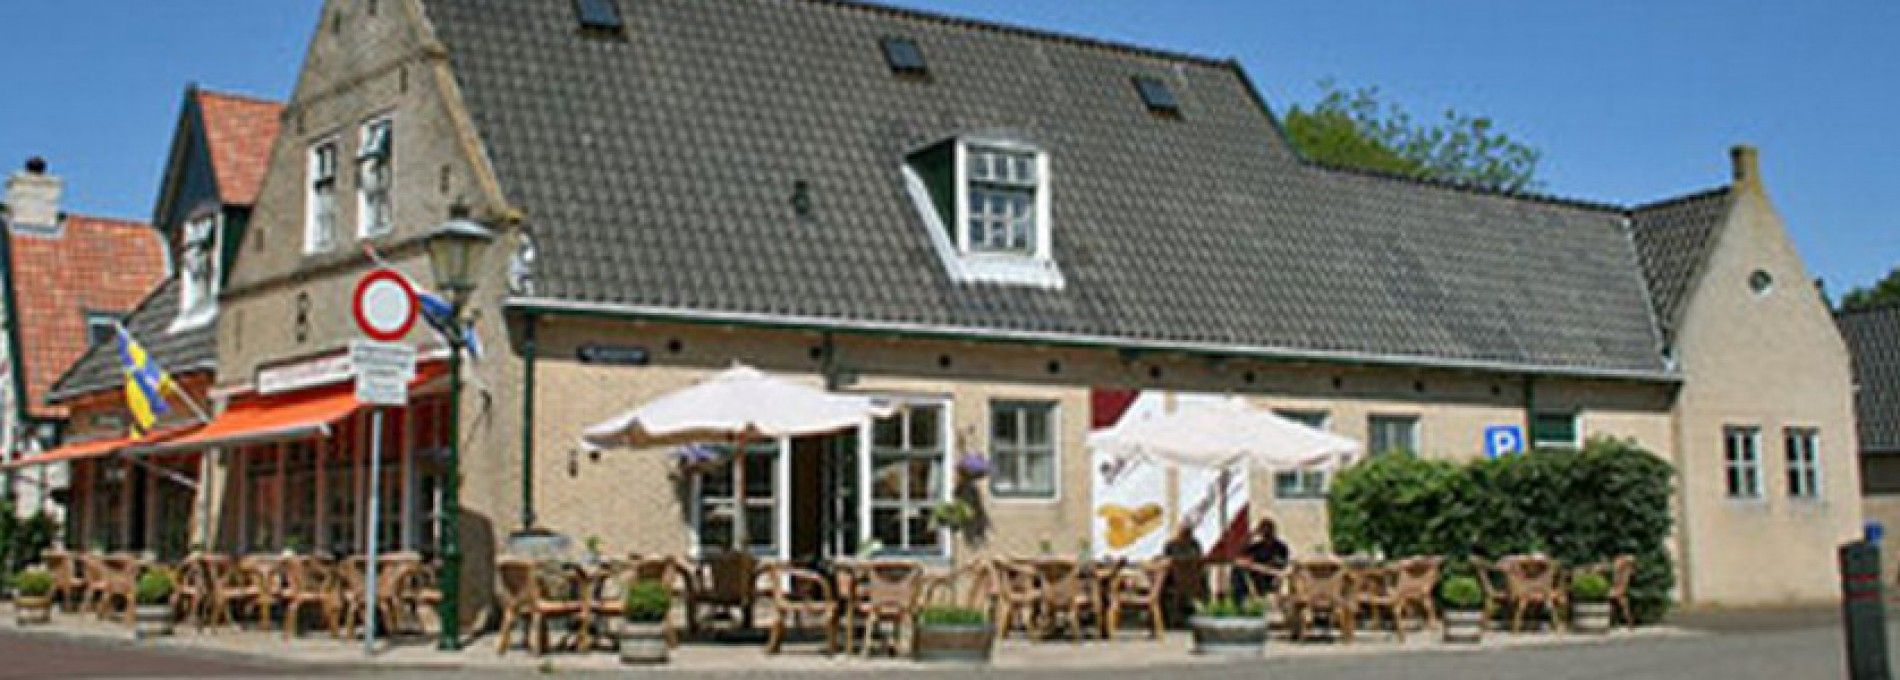 Kaffeehaus & Bäckerei P.J. de Boer - VVV Ameland